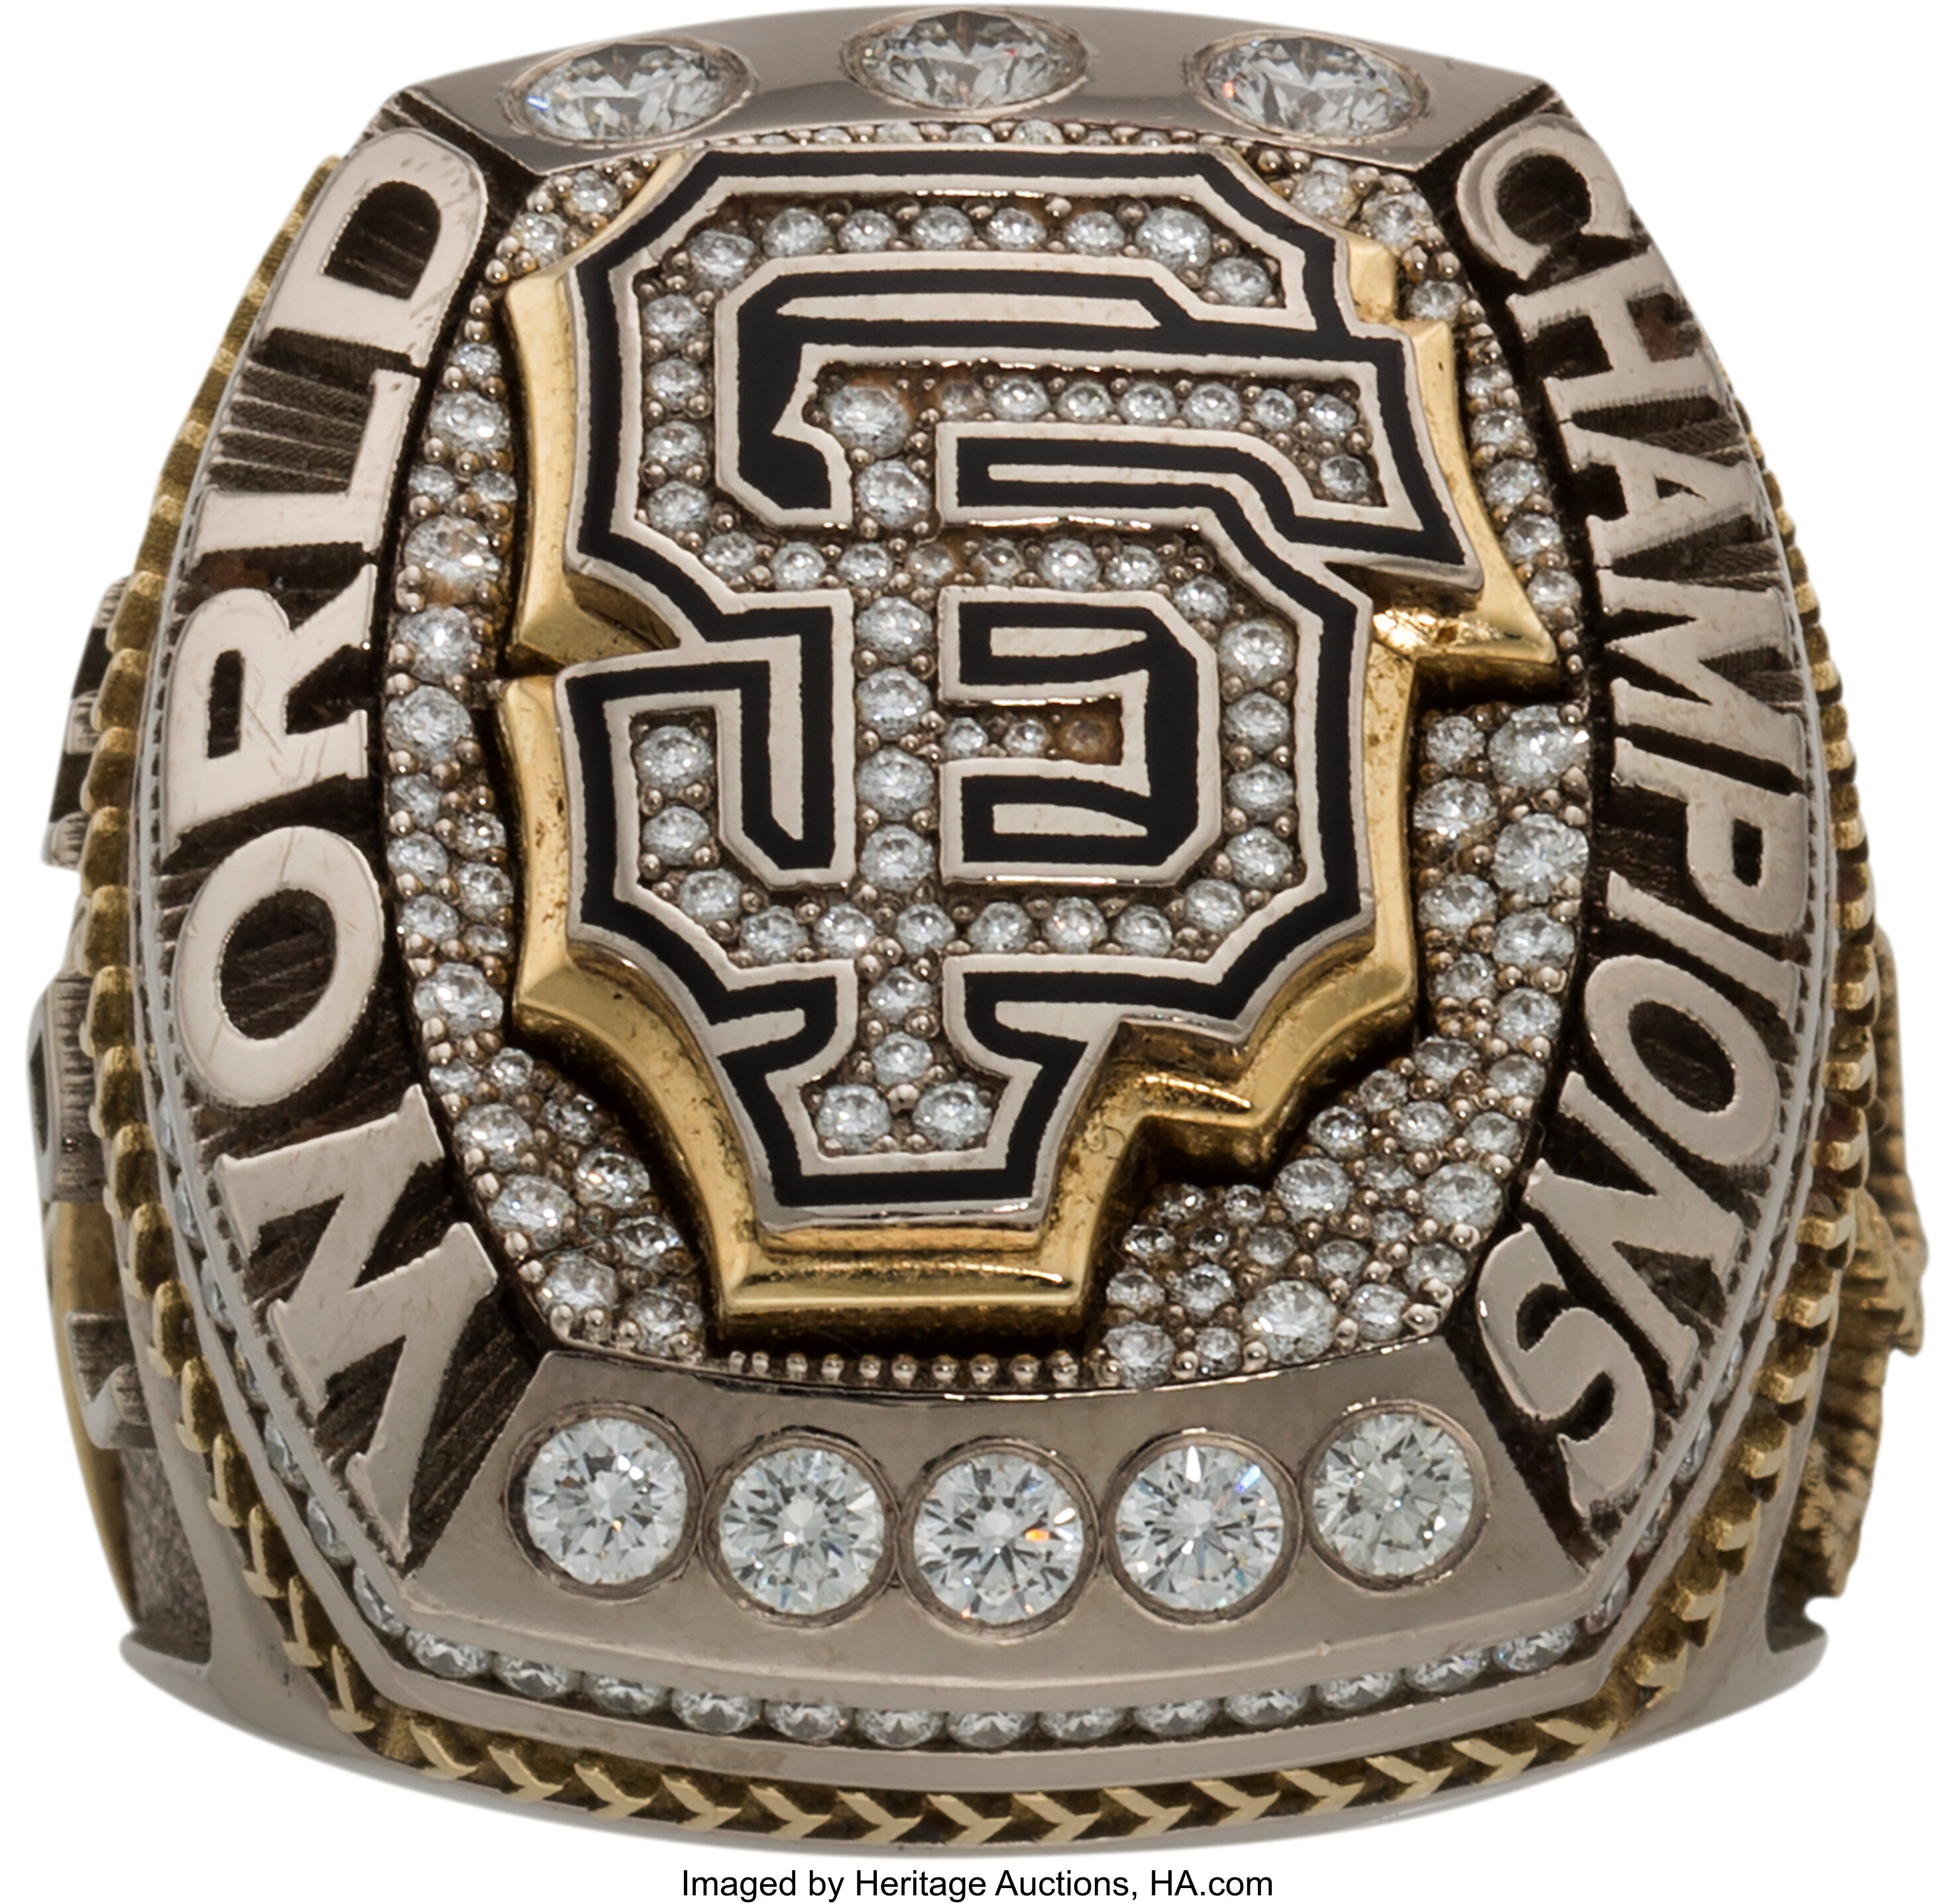 2014 San Francisco Giants World Series Championship Ring